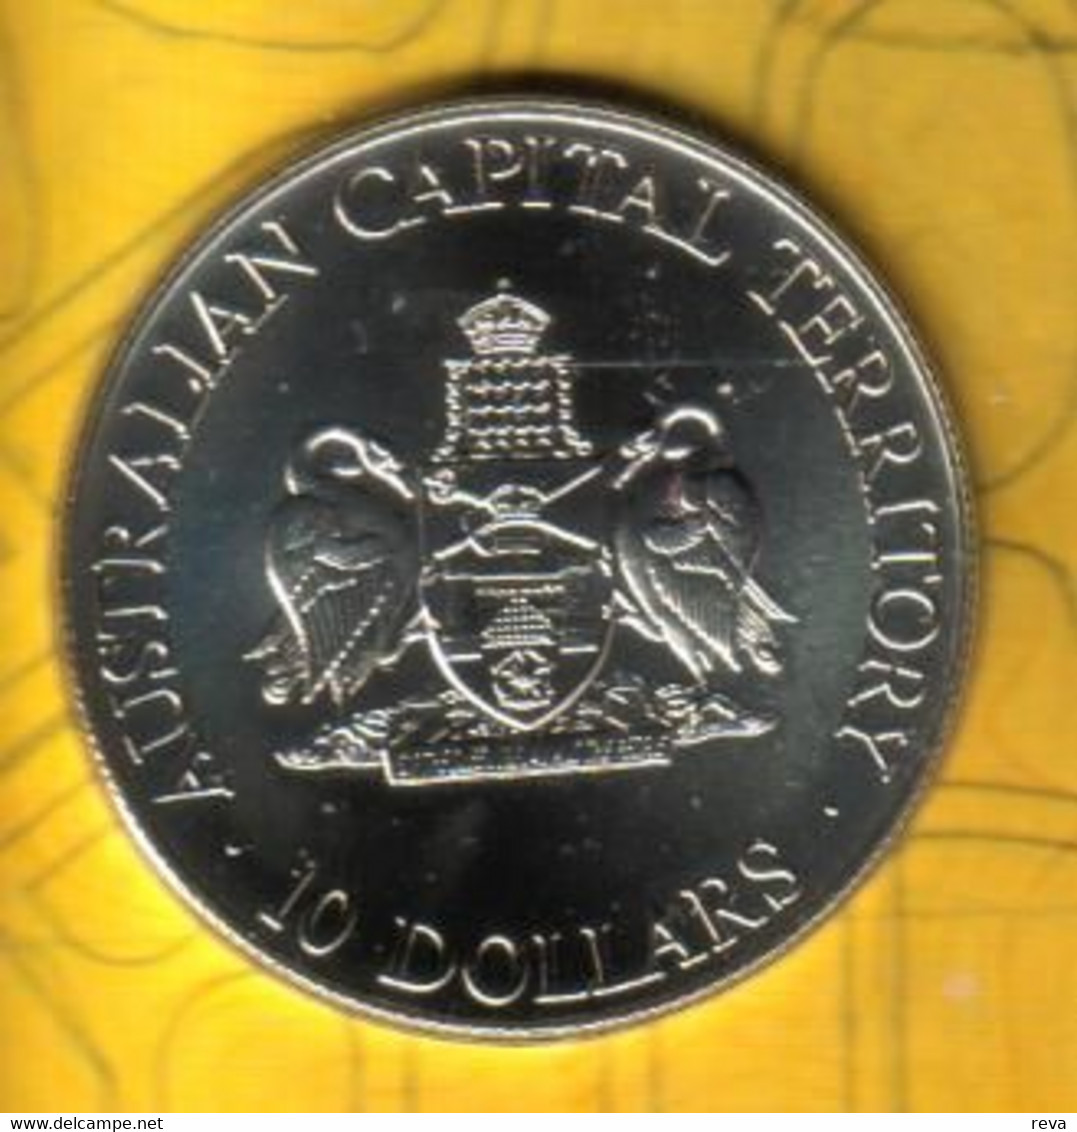 AUSTRALIA $10 STATE SERIES AUSTRALIAN CAPITAL TERRITORY 1993 SILVER UNC KM210 READ DESCRIPTION CAREFULLY !!! - 10 Dollars